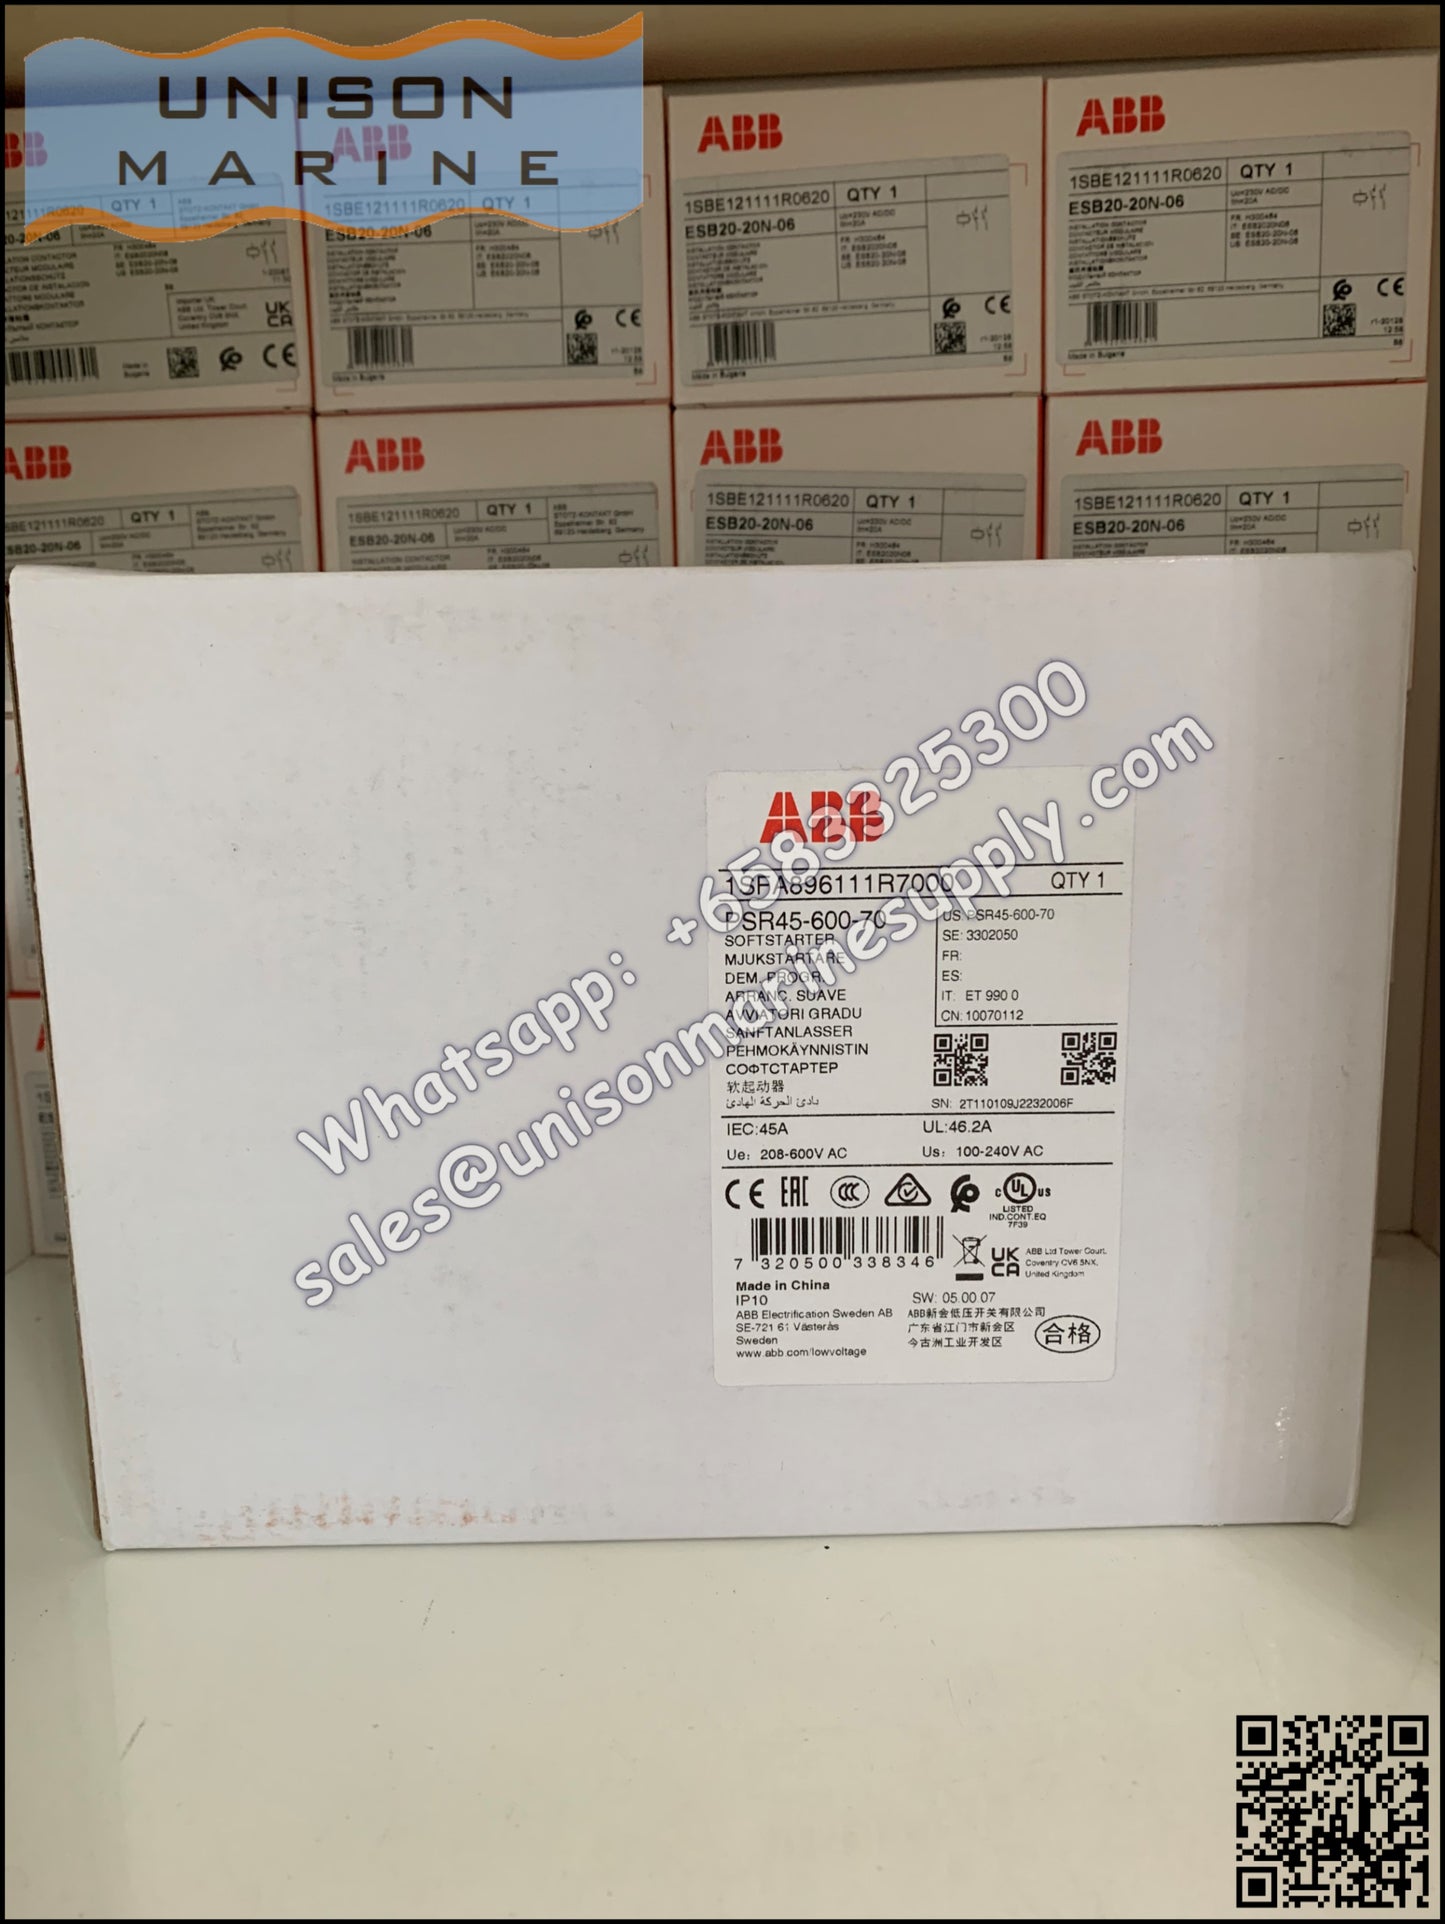 ABB PSR Softstarter PSR45-600-70 / PSR45-600-11